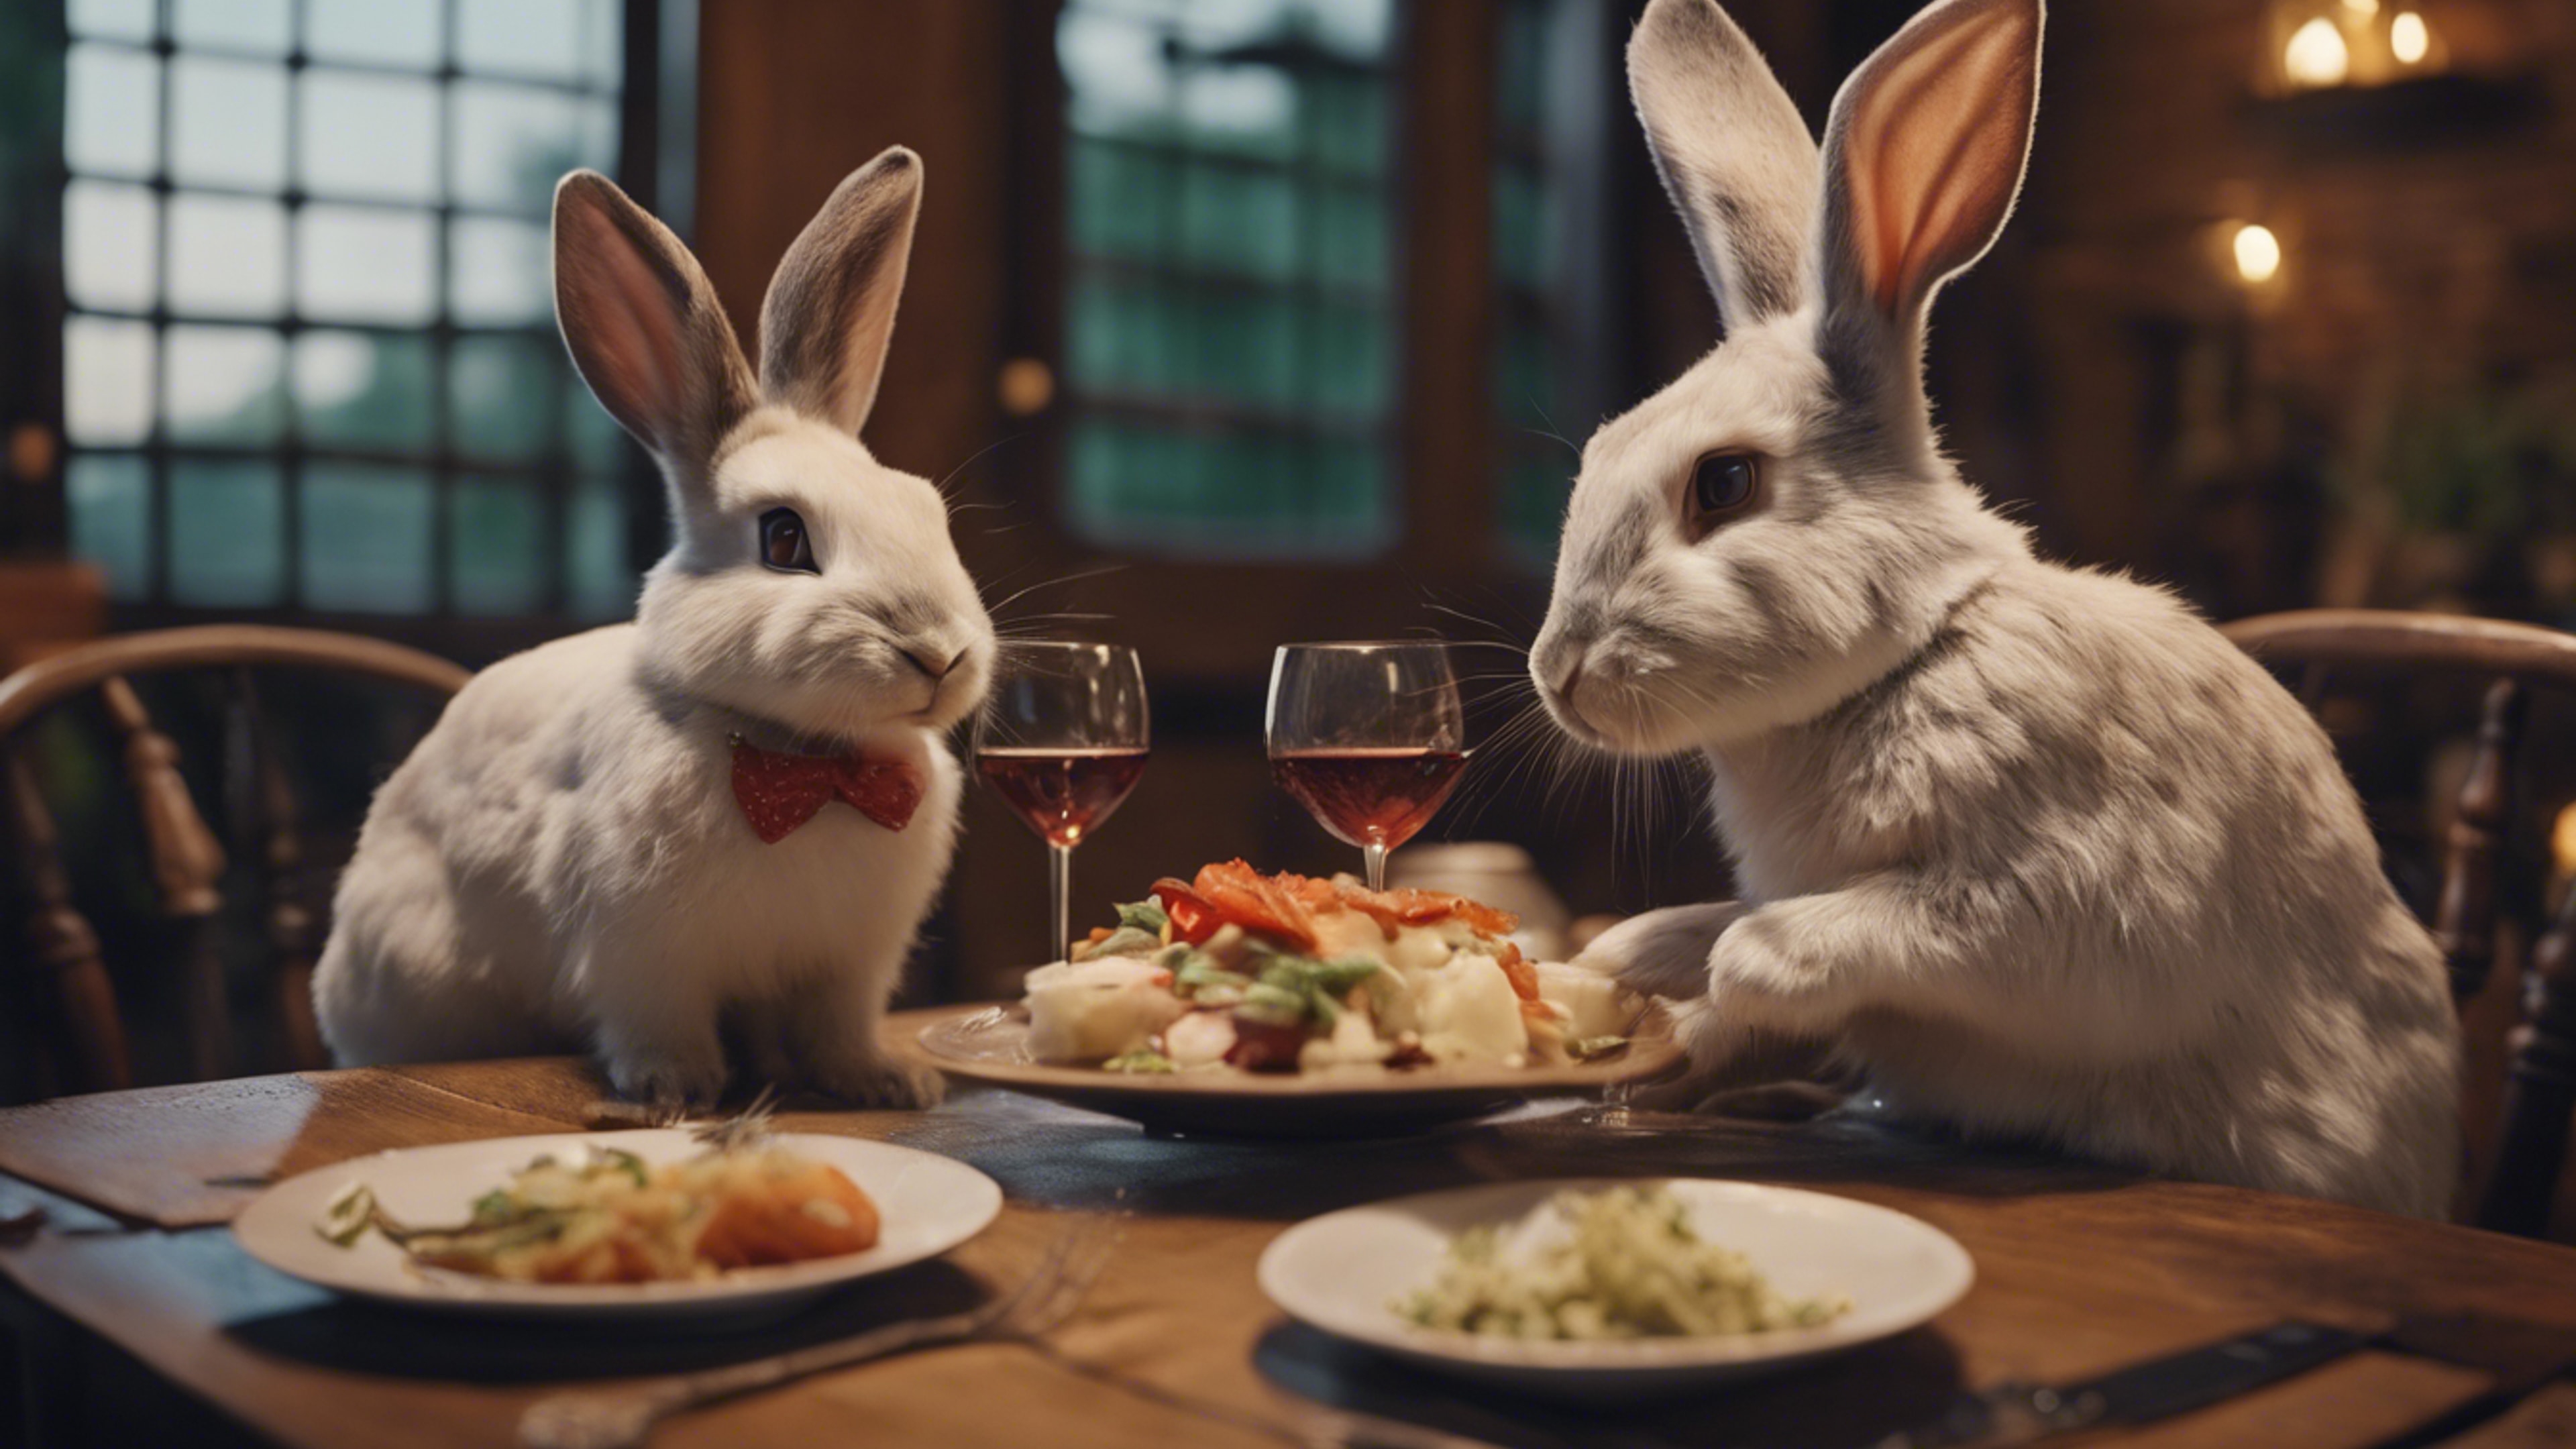 A rabbit couple enjoying a romantic dinner in a quaint, rustic setting. Tapeta[f4a7594170784844a7a3]